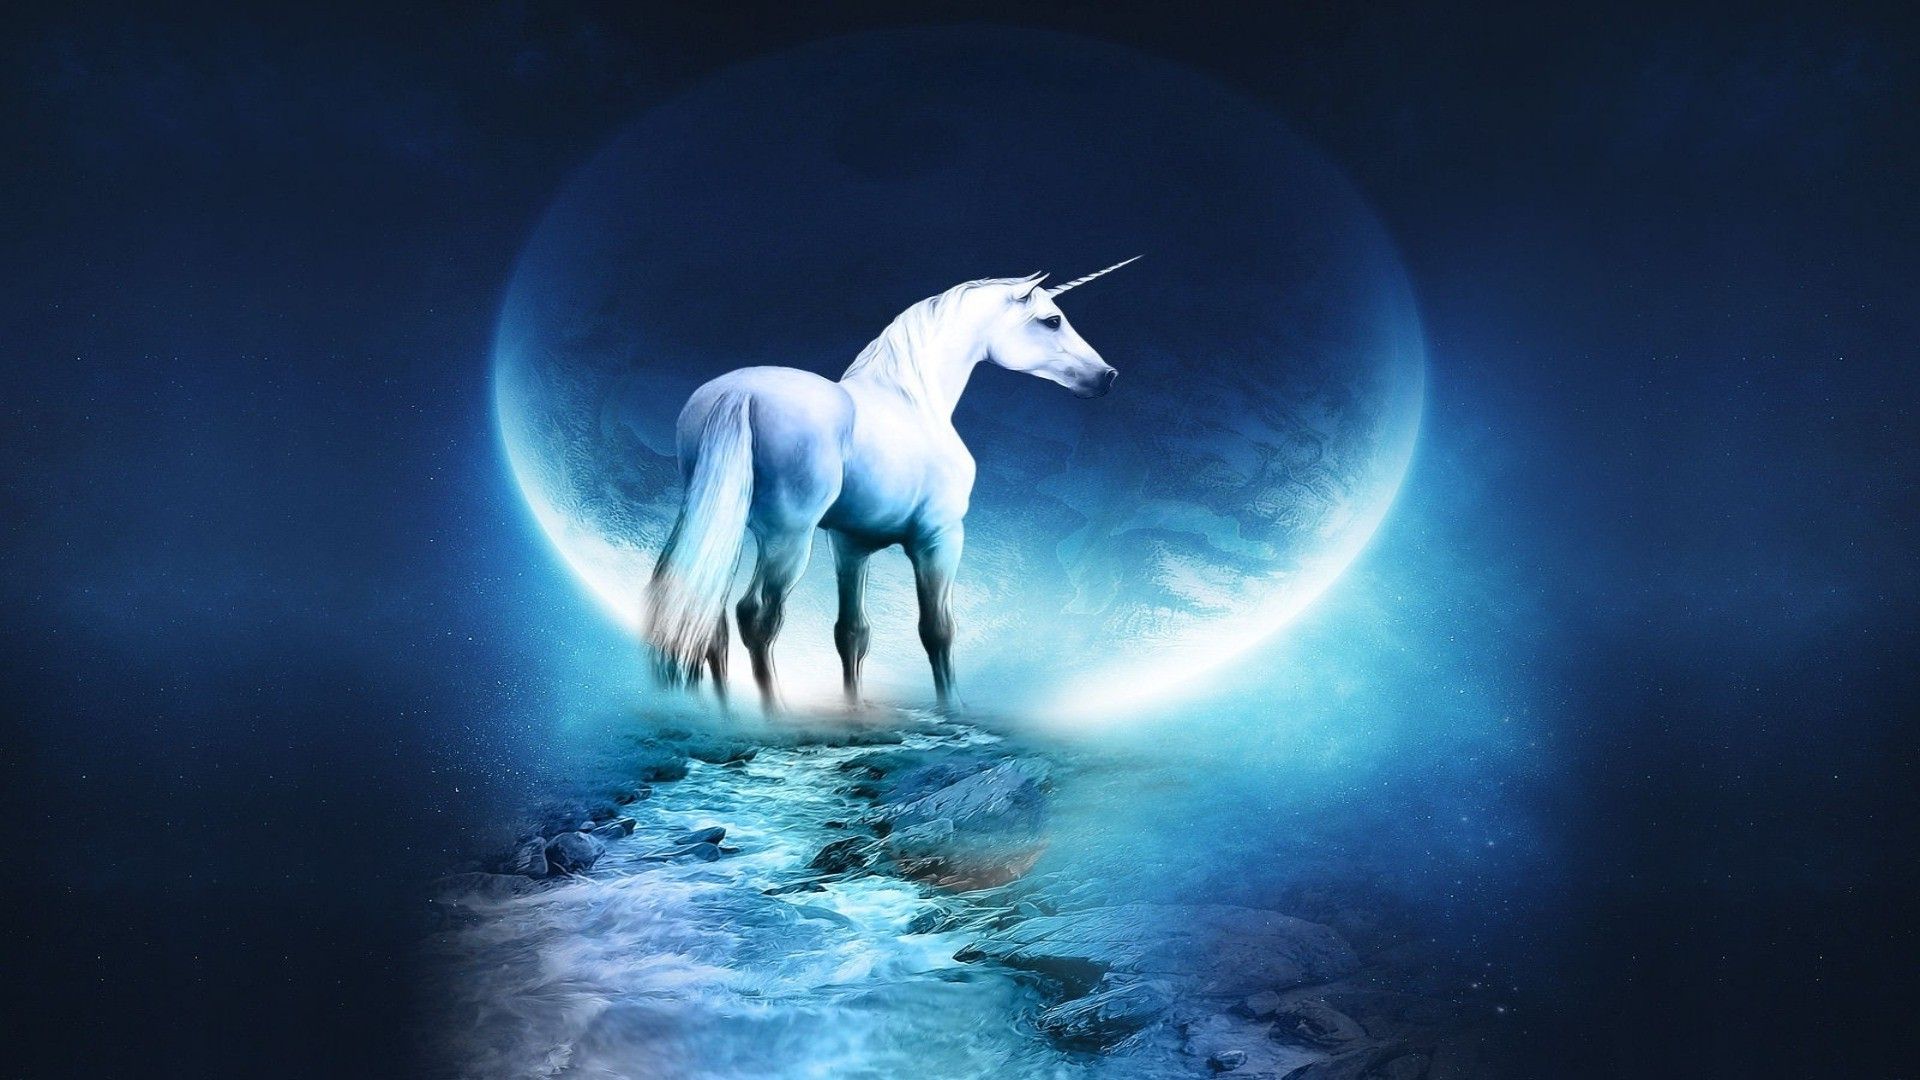 Unicorn in the moonlight